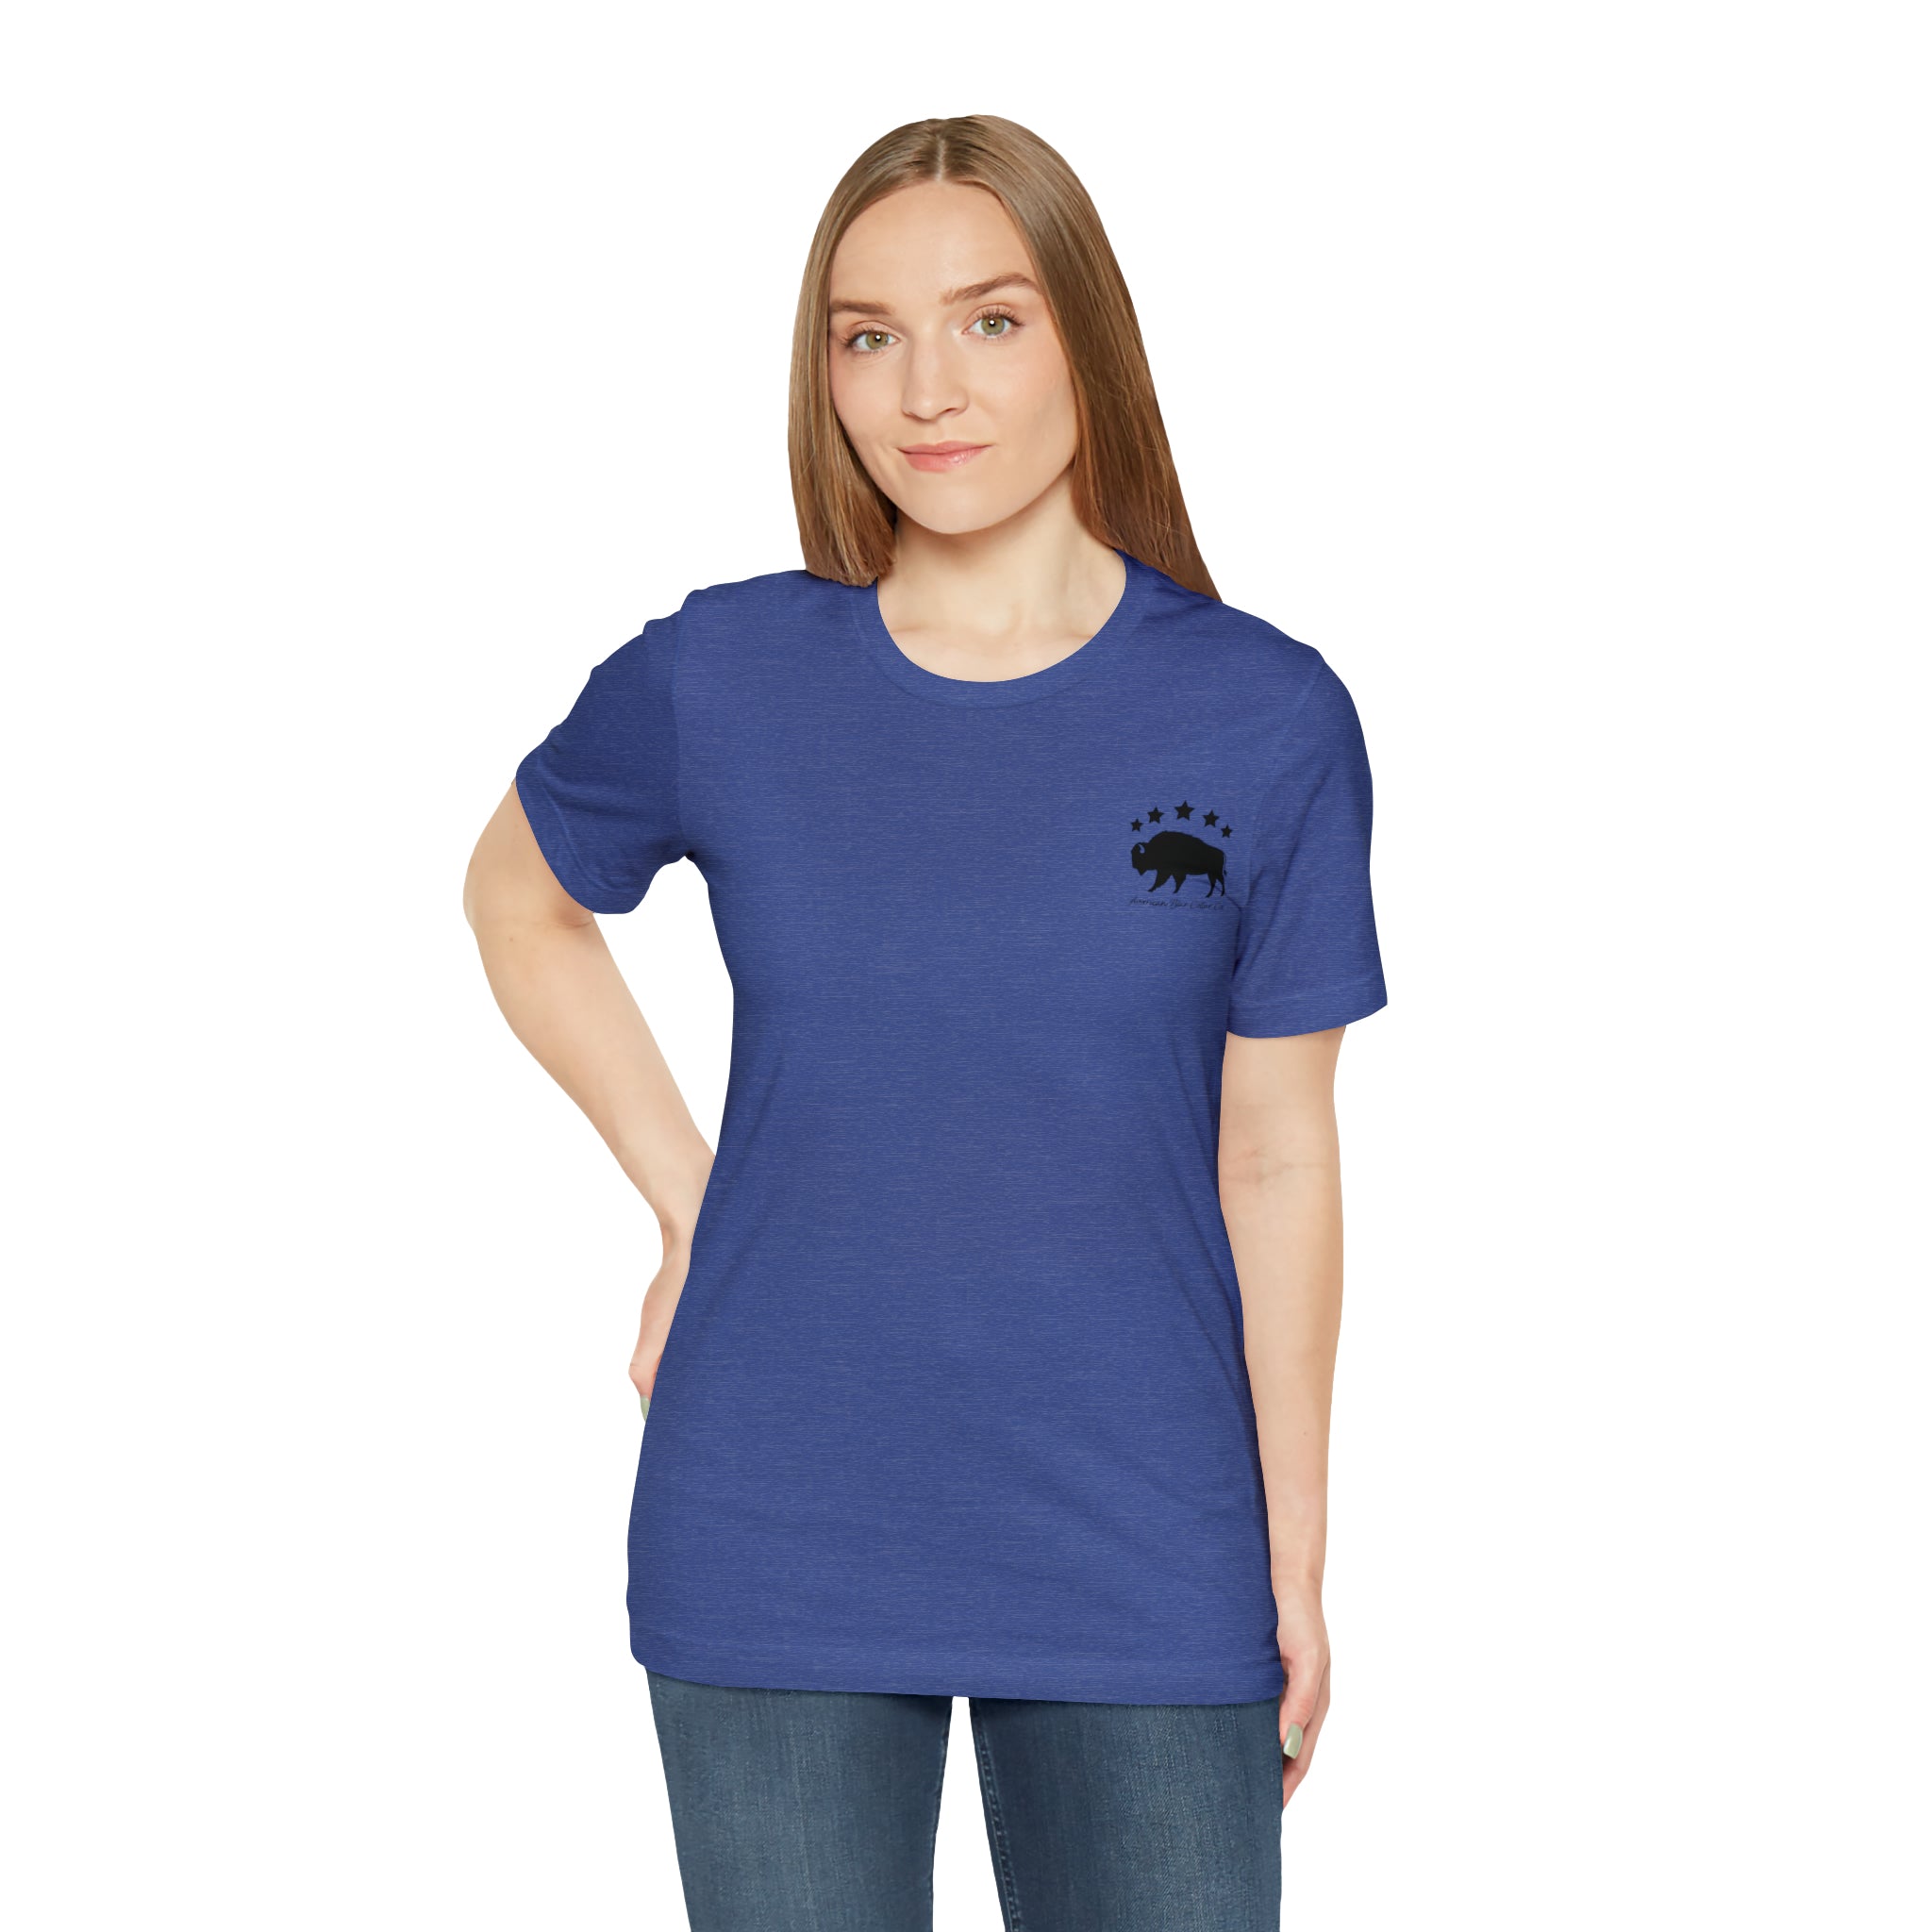 Blue Collar Christmas T-Shirt